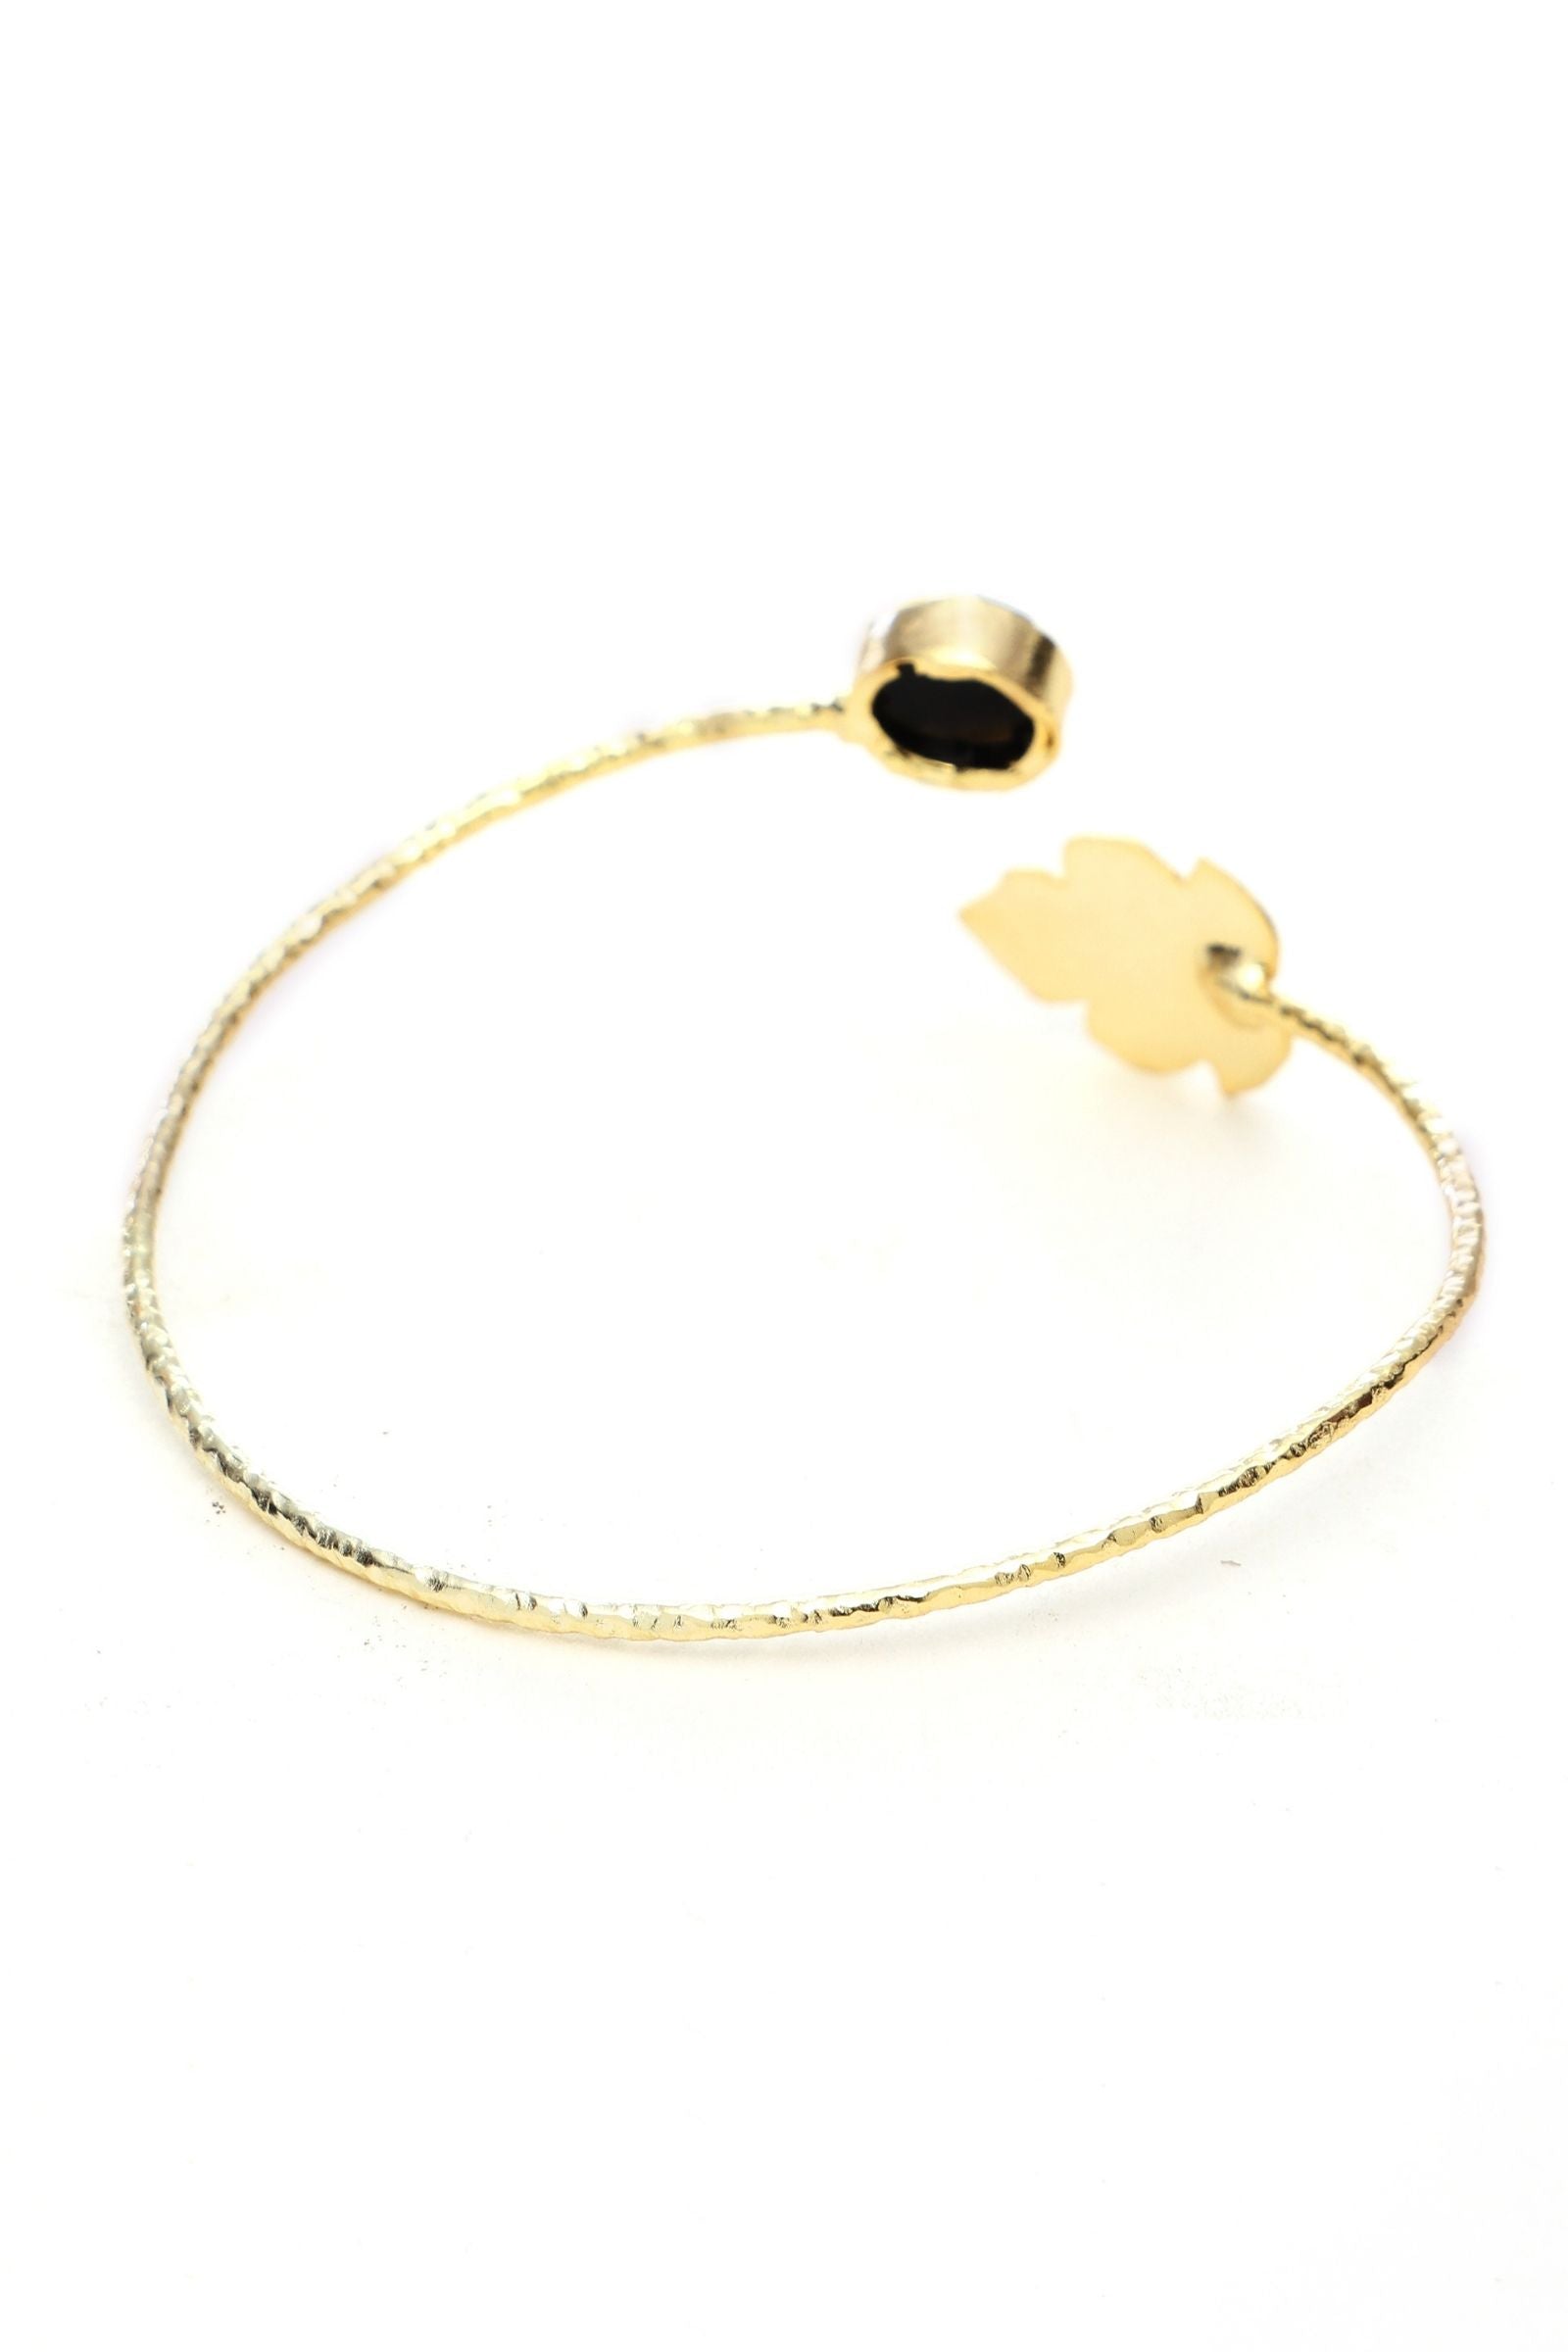 Black Onyx Gold Leaf Bracelet